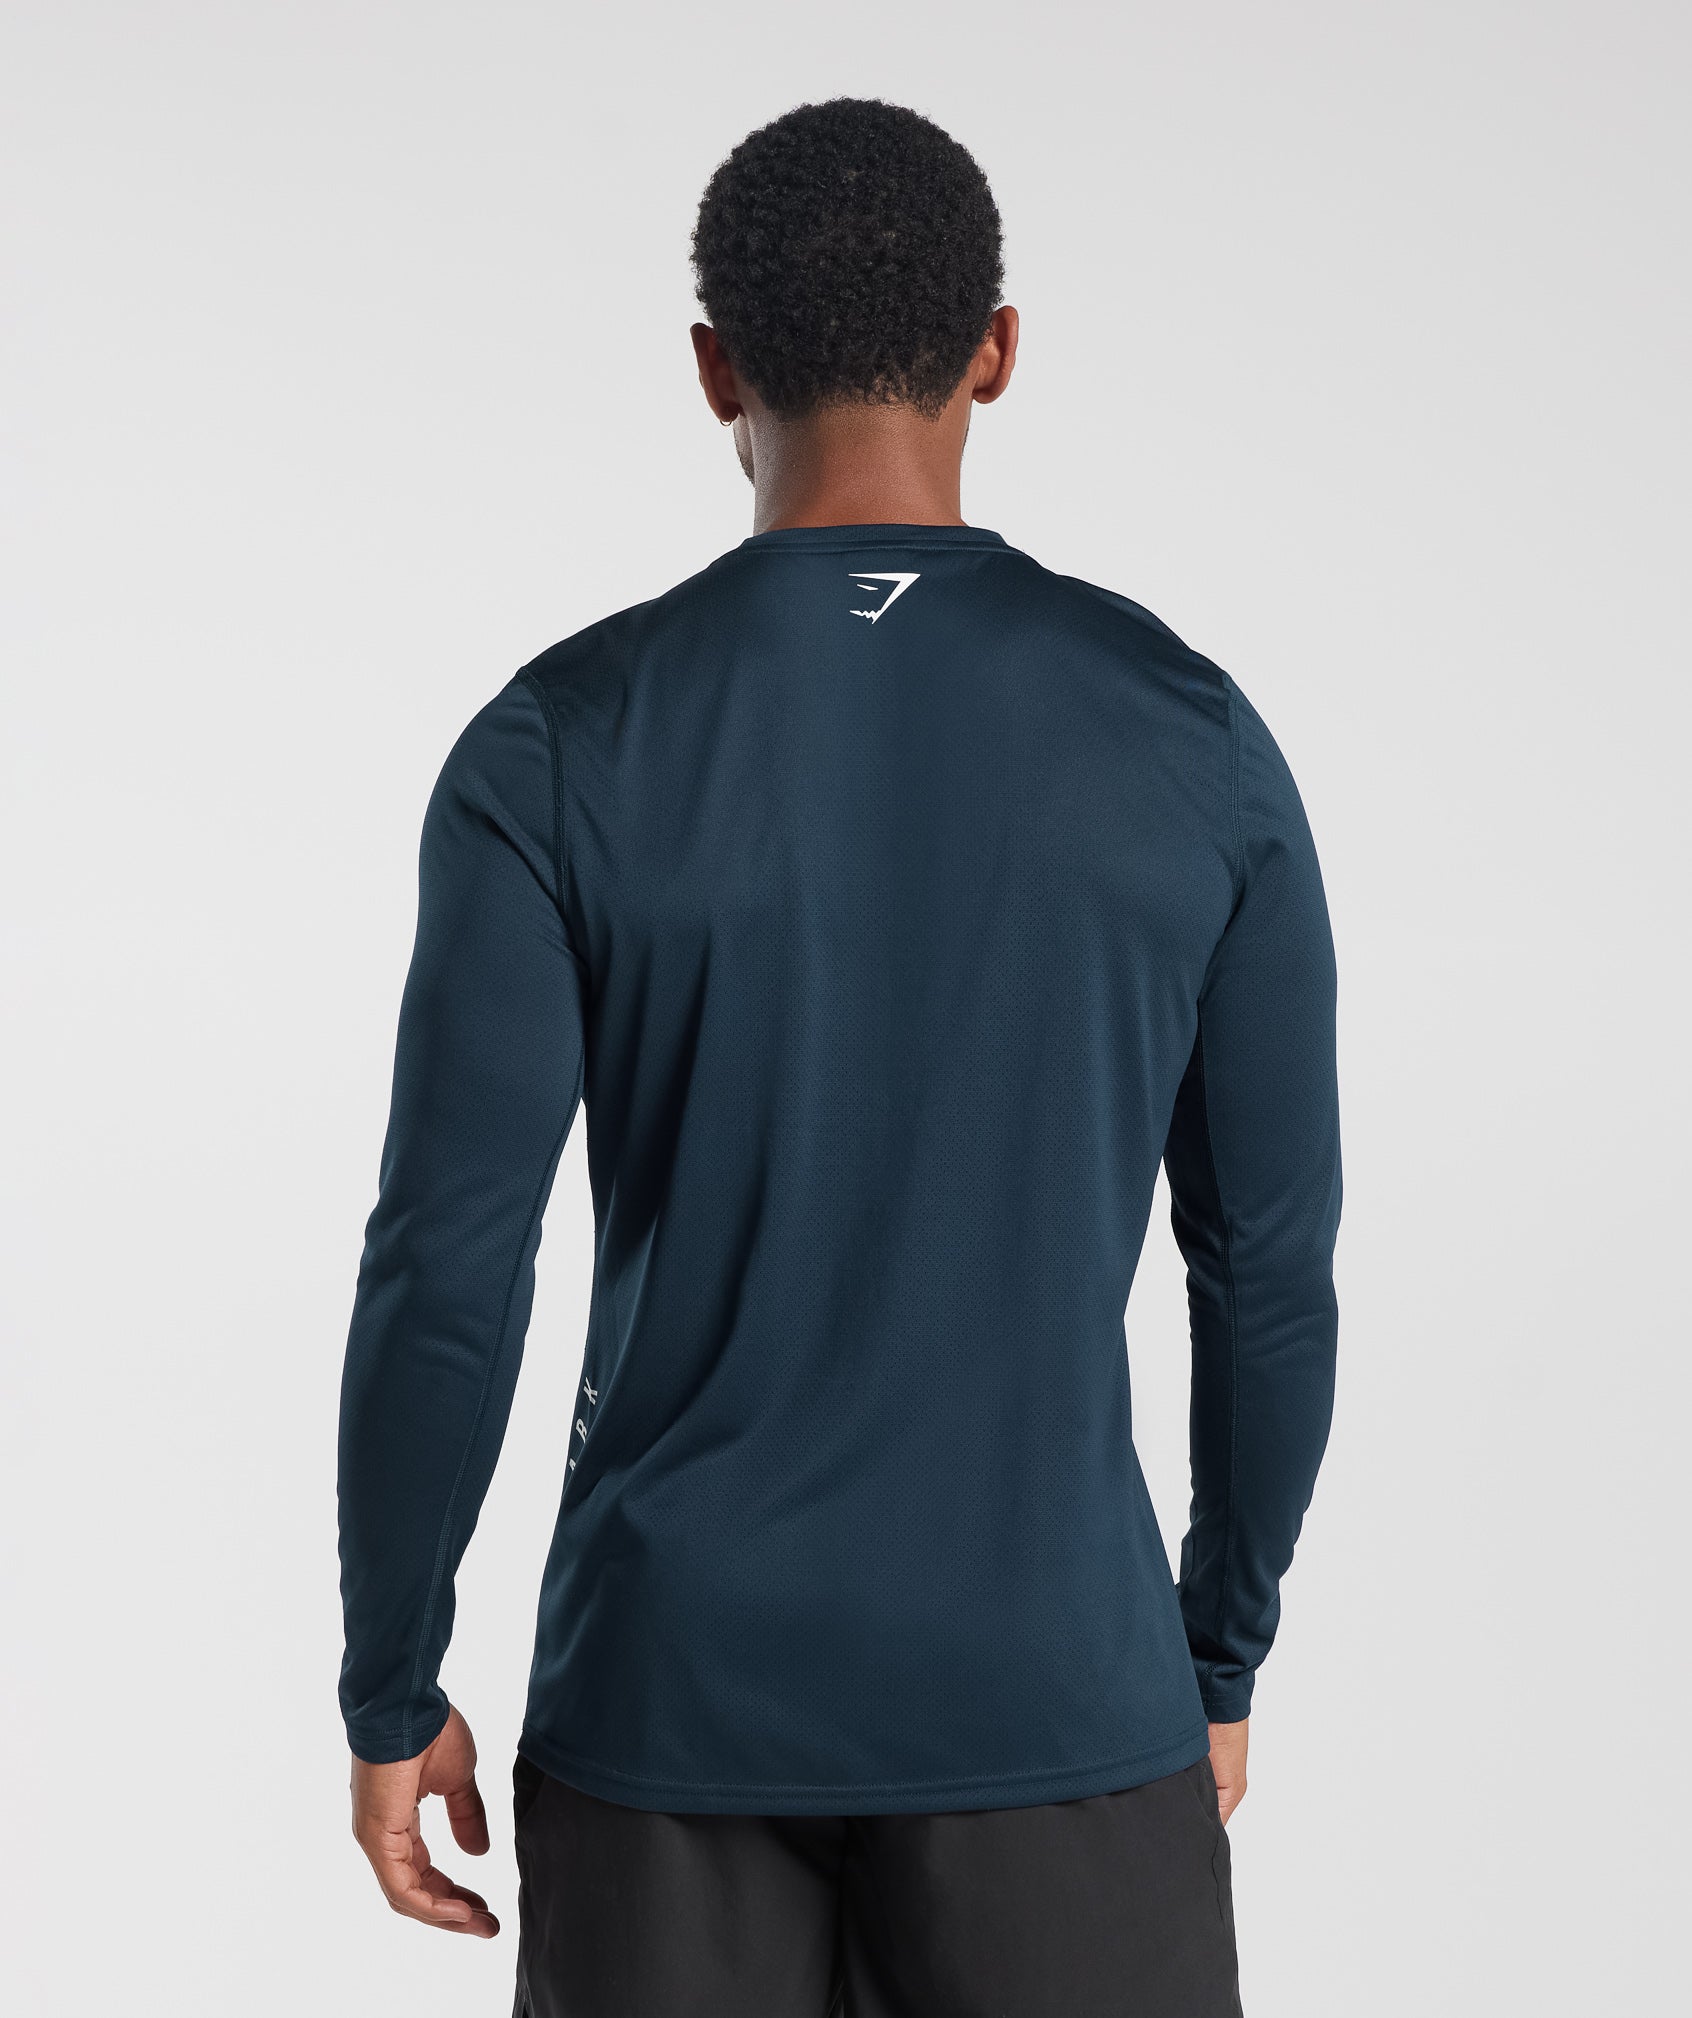 Sport Long Sleeve T-Shirt in Navy/Black Marl - view 2